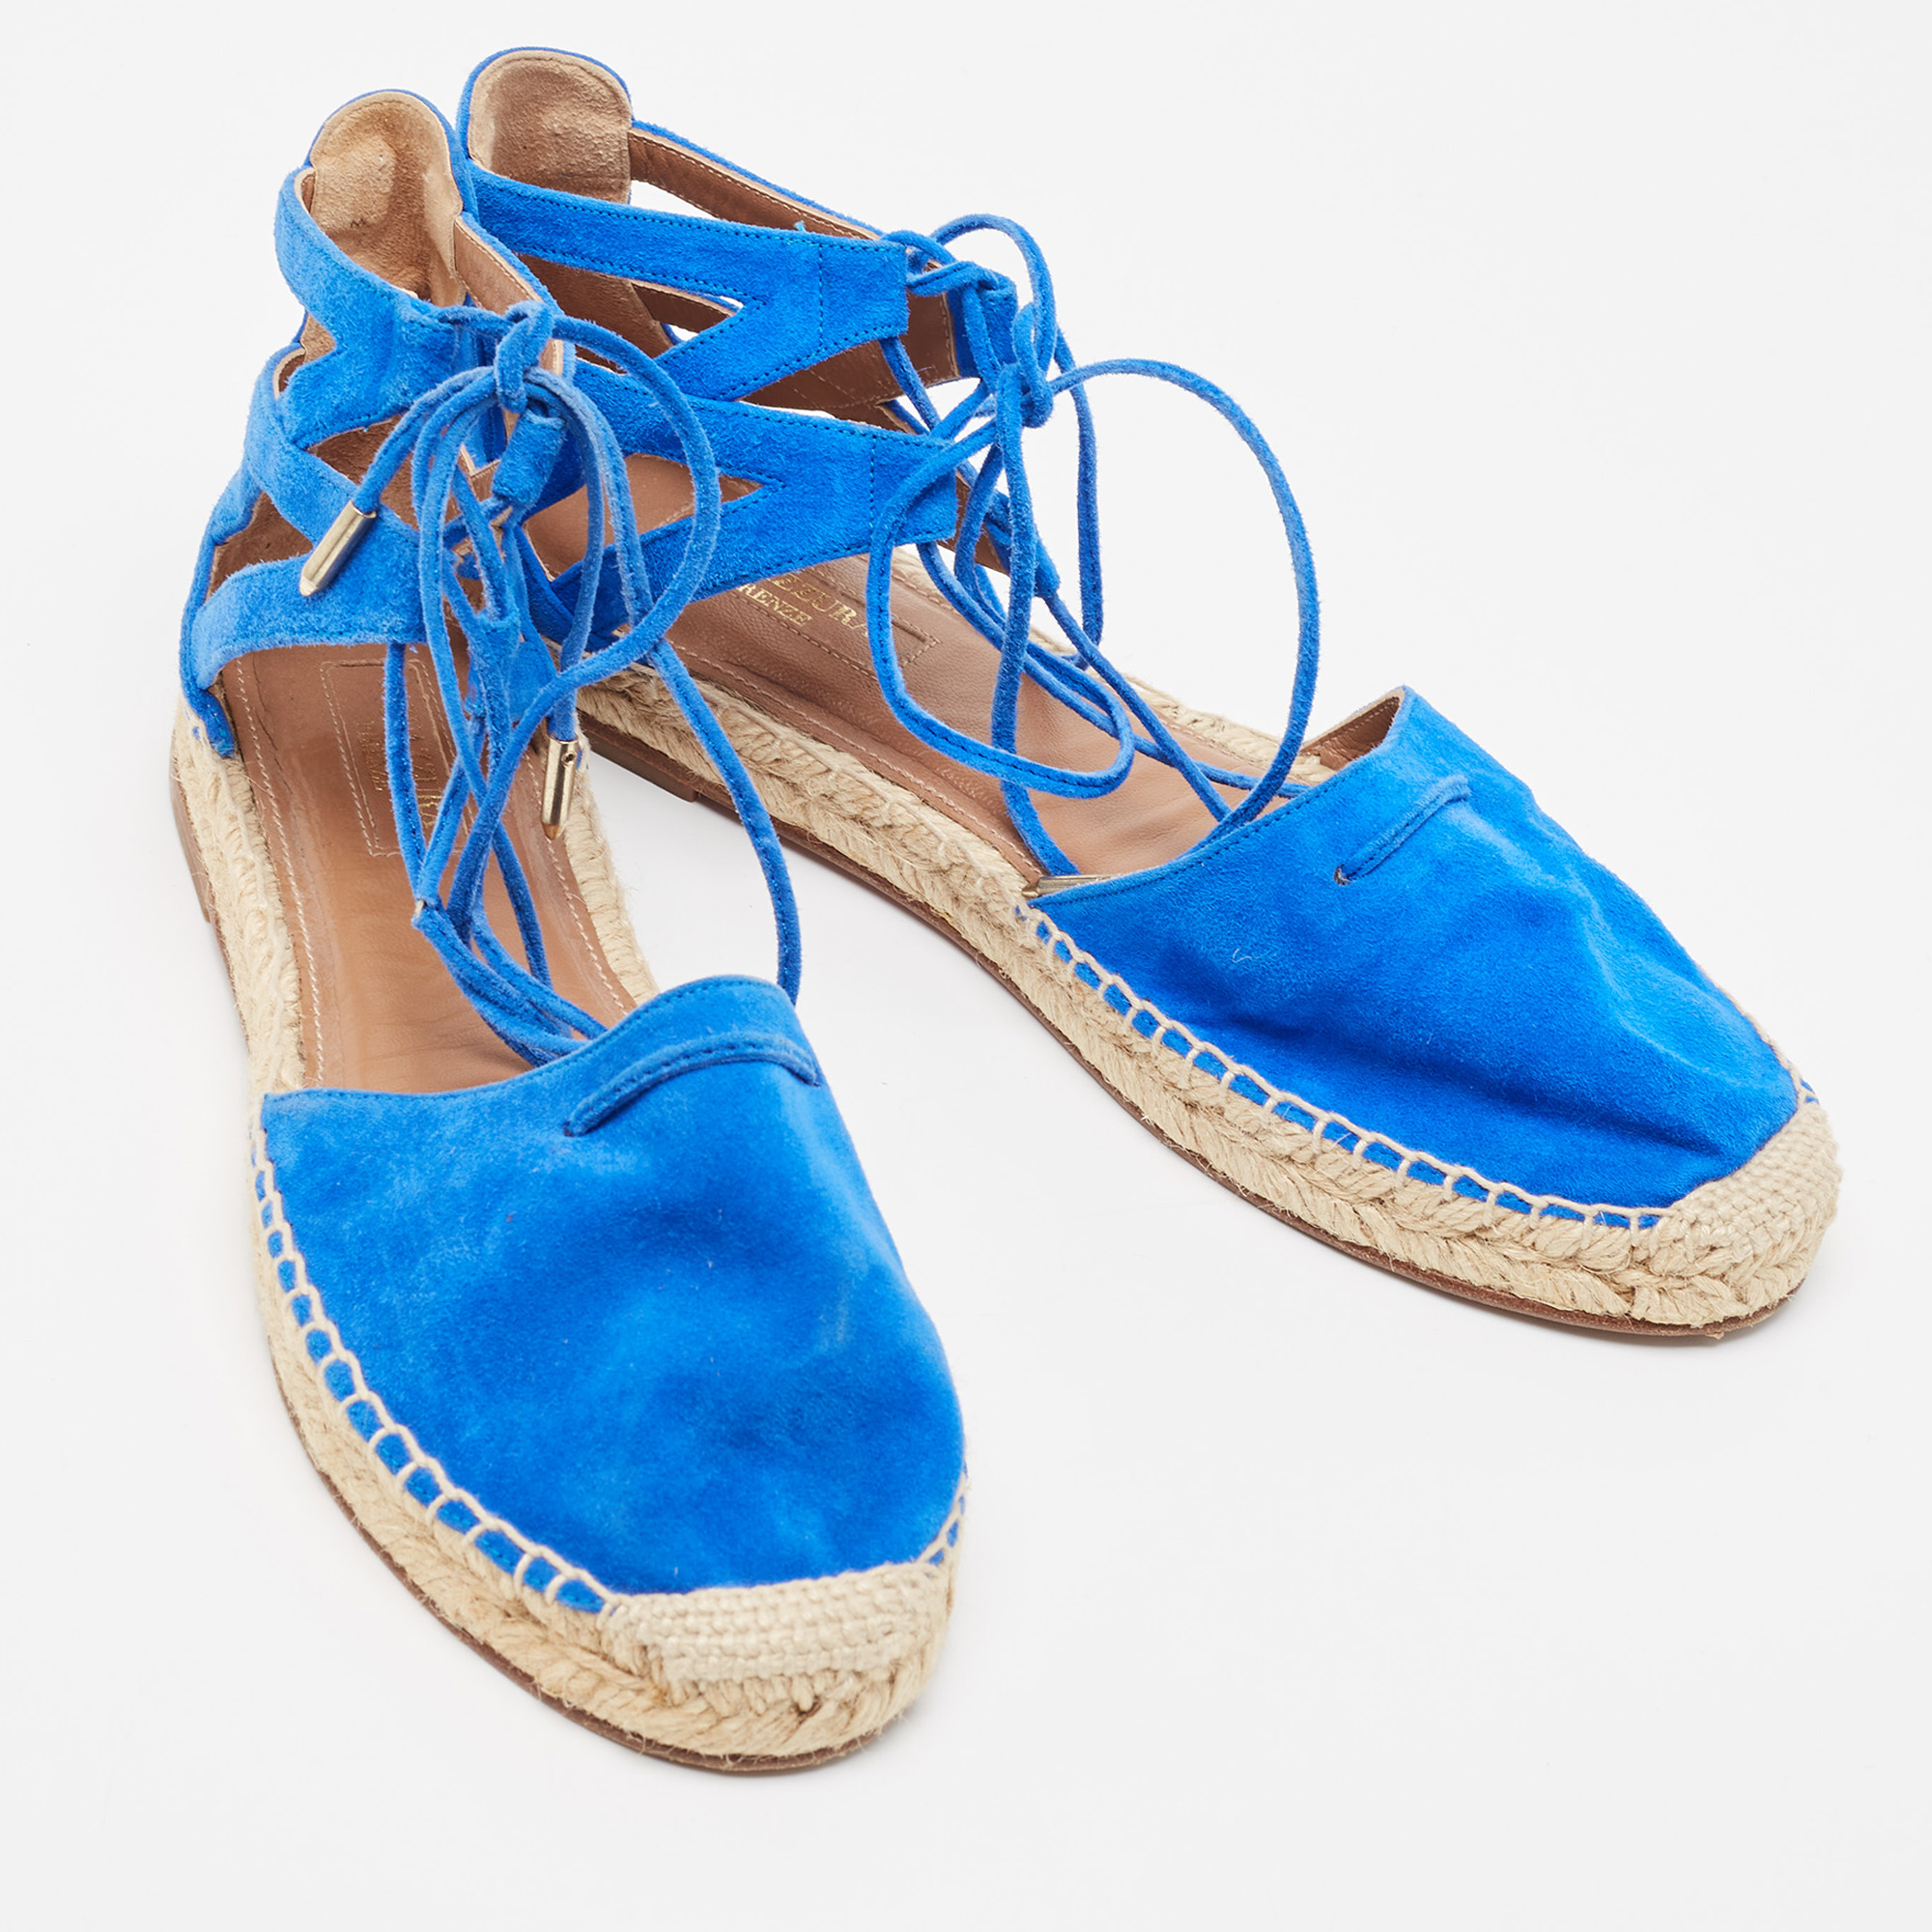 Aquazzura Blue Suede Strappy Espadrille Sandals Size 38